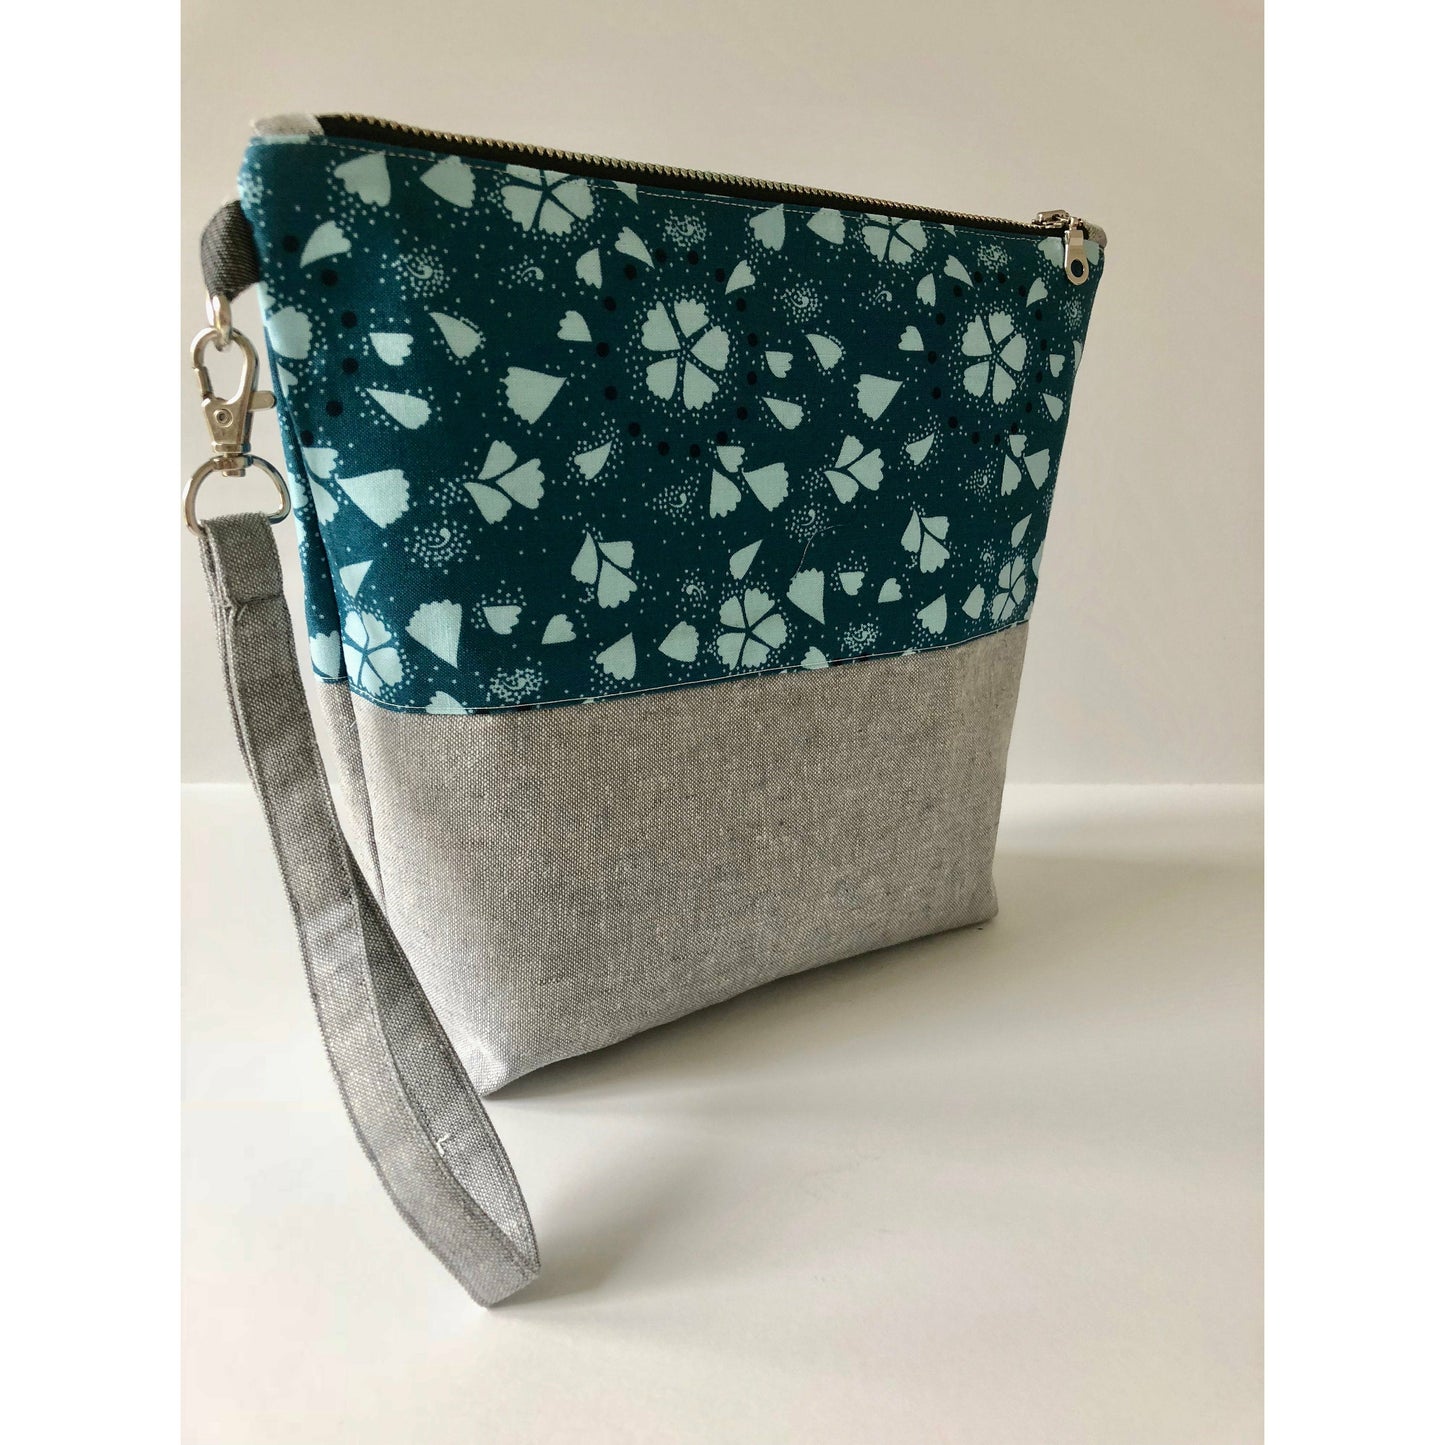 Project Bag, Knitting Bag, Medium Size Linen and Cotton Bag with YKK Metal Zipper- THE LORETTA